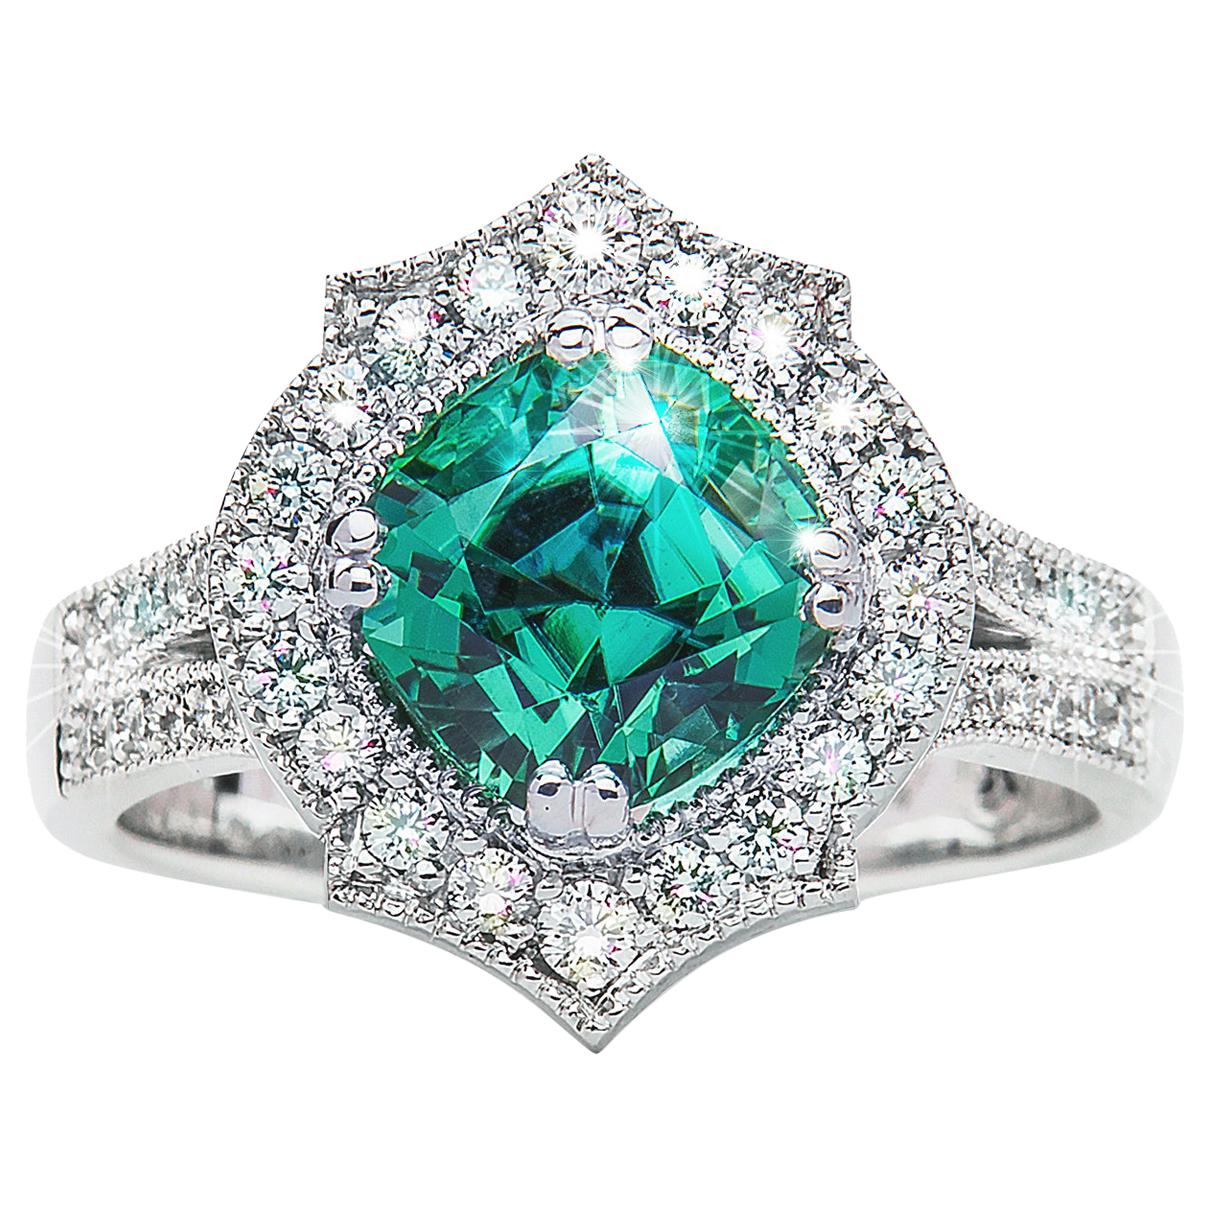 2.59 Carat Namibian Intense Green Tourmaline Cushion Diamond Ring Natalie Barney For Sale